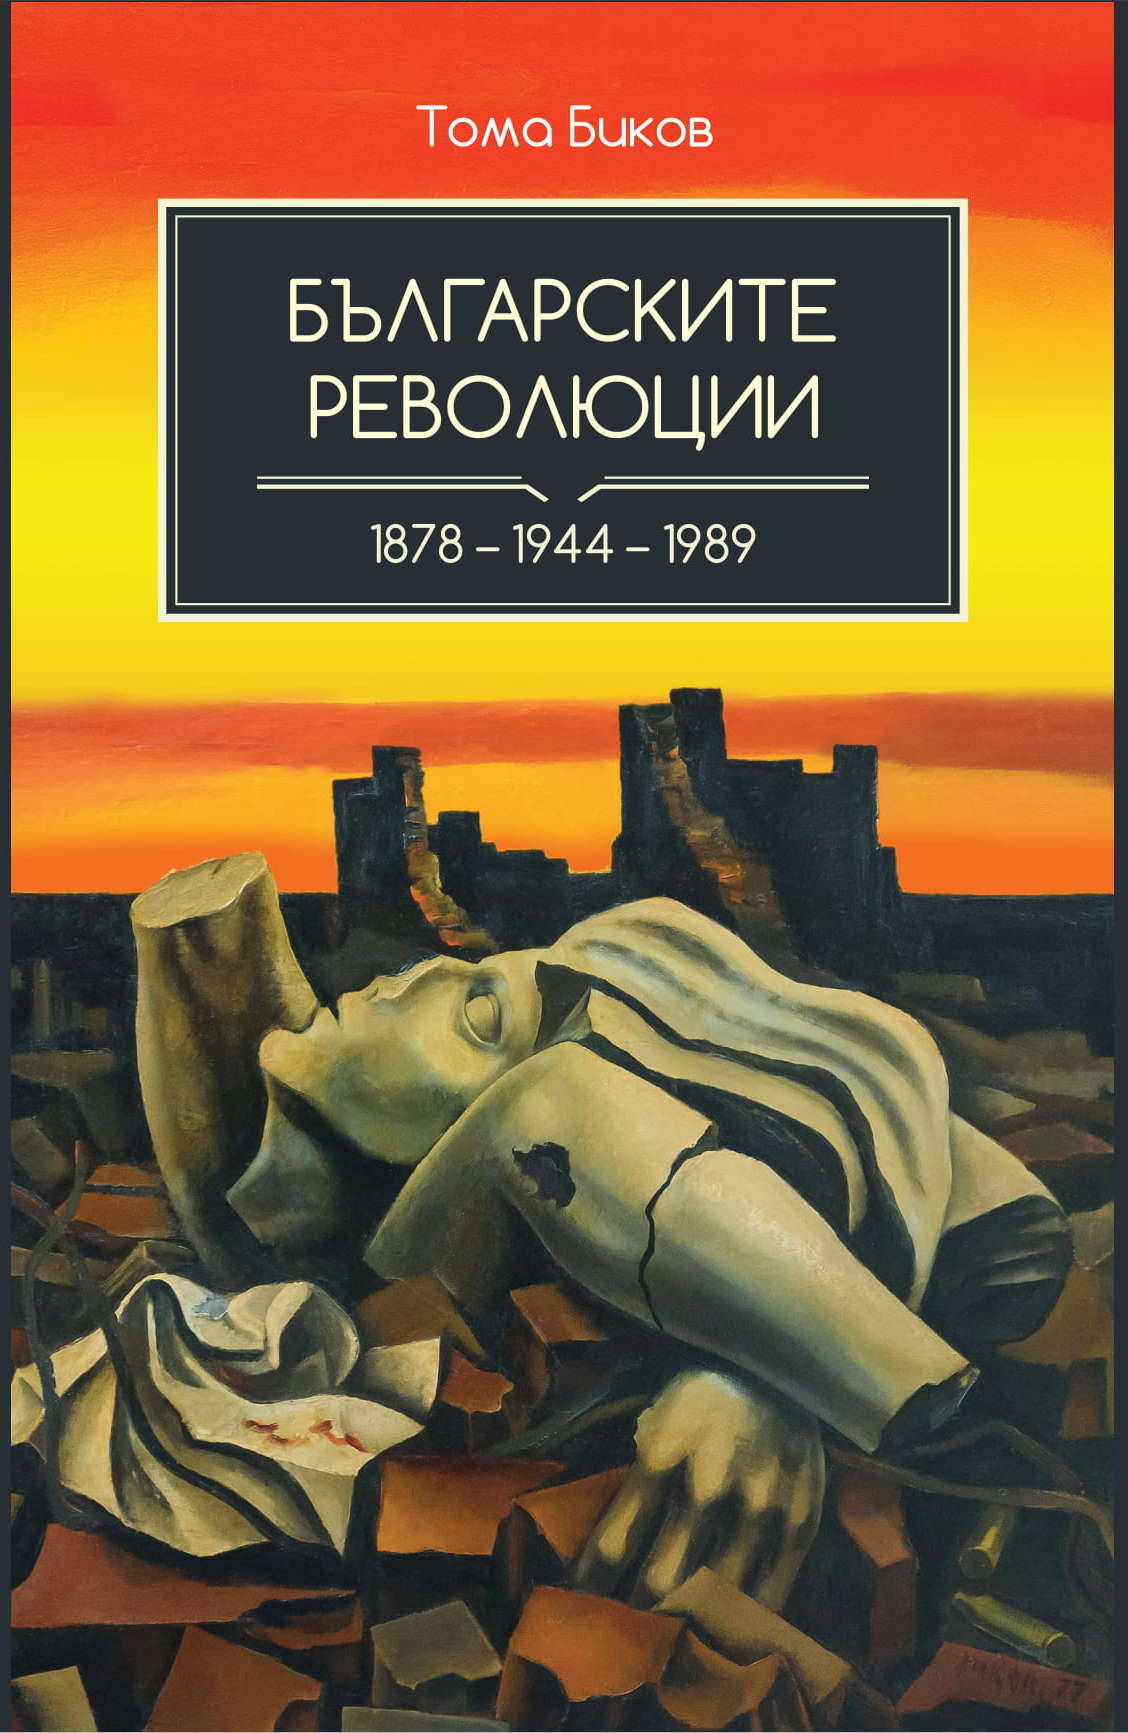 Българските революции